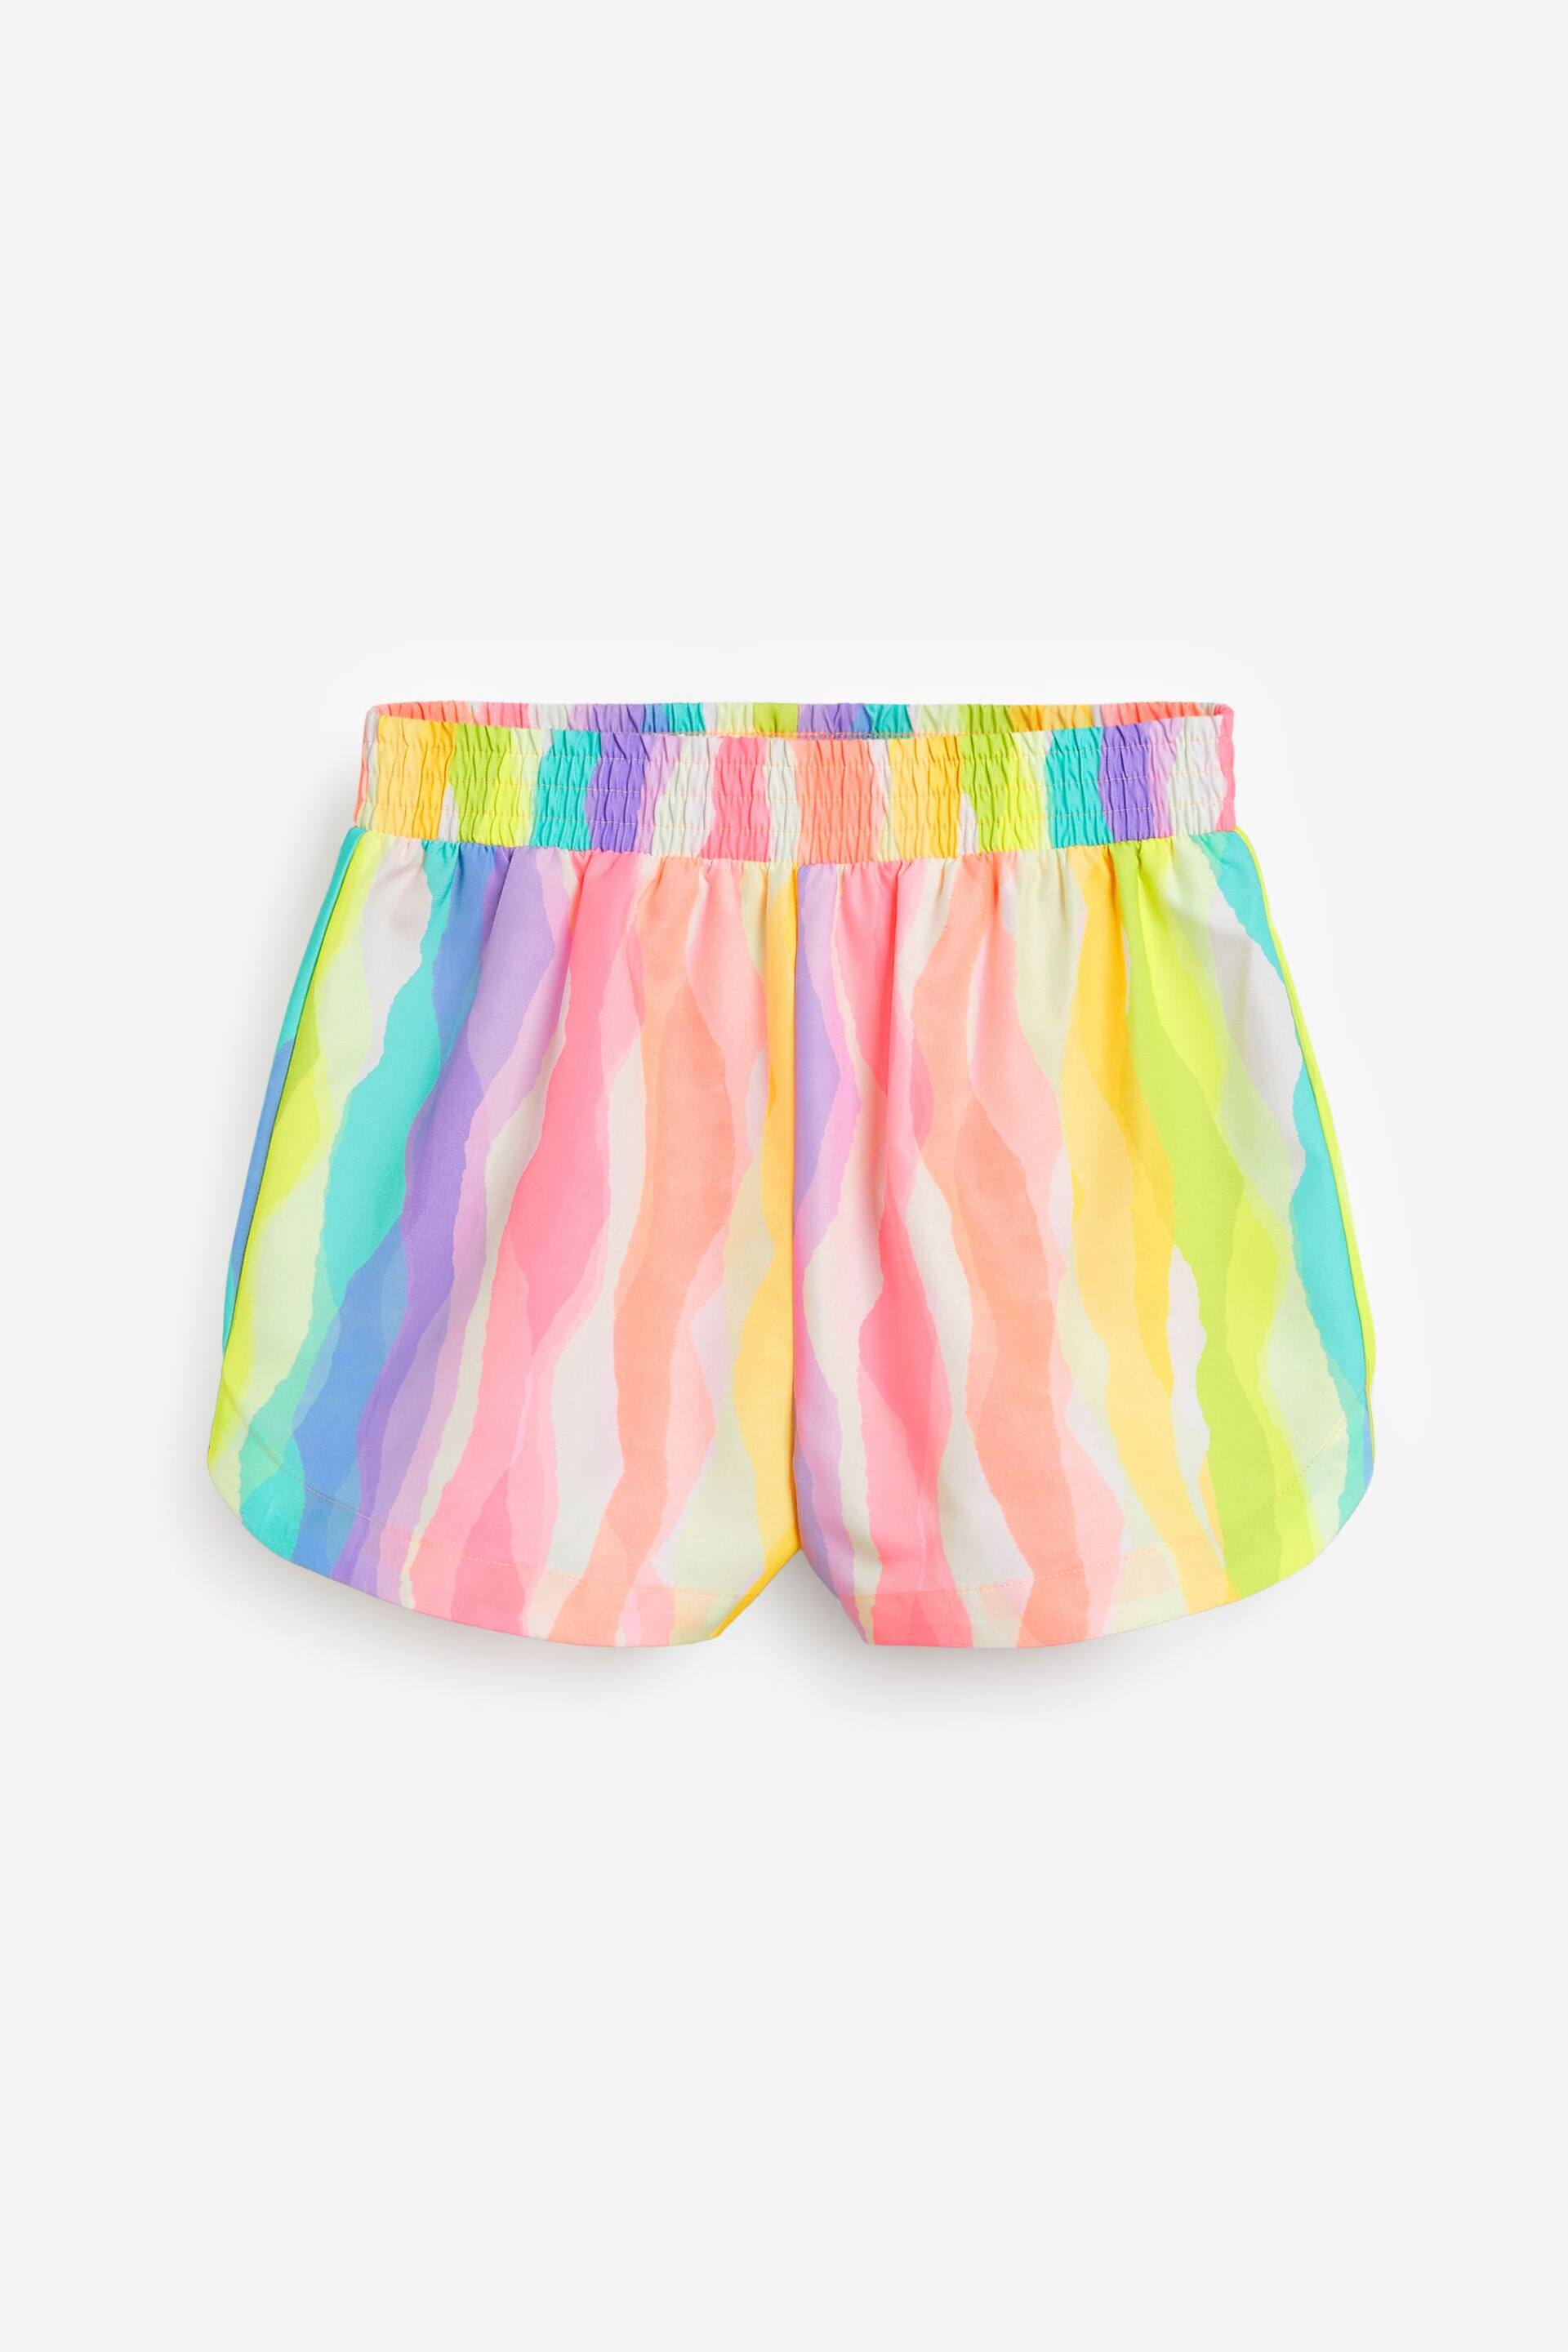 Multi Rainbow Beach Shorts - Image 4 of 6